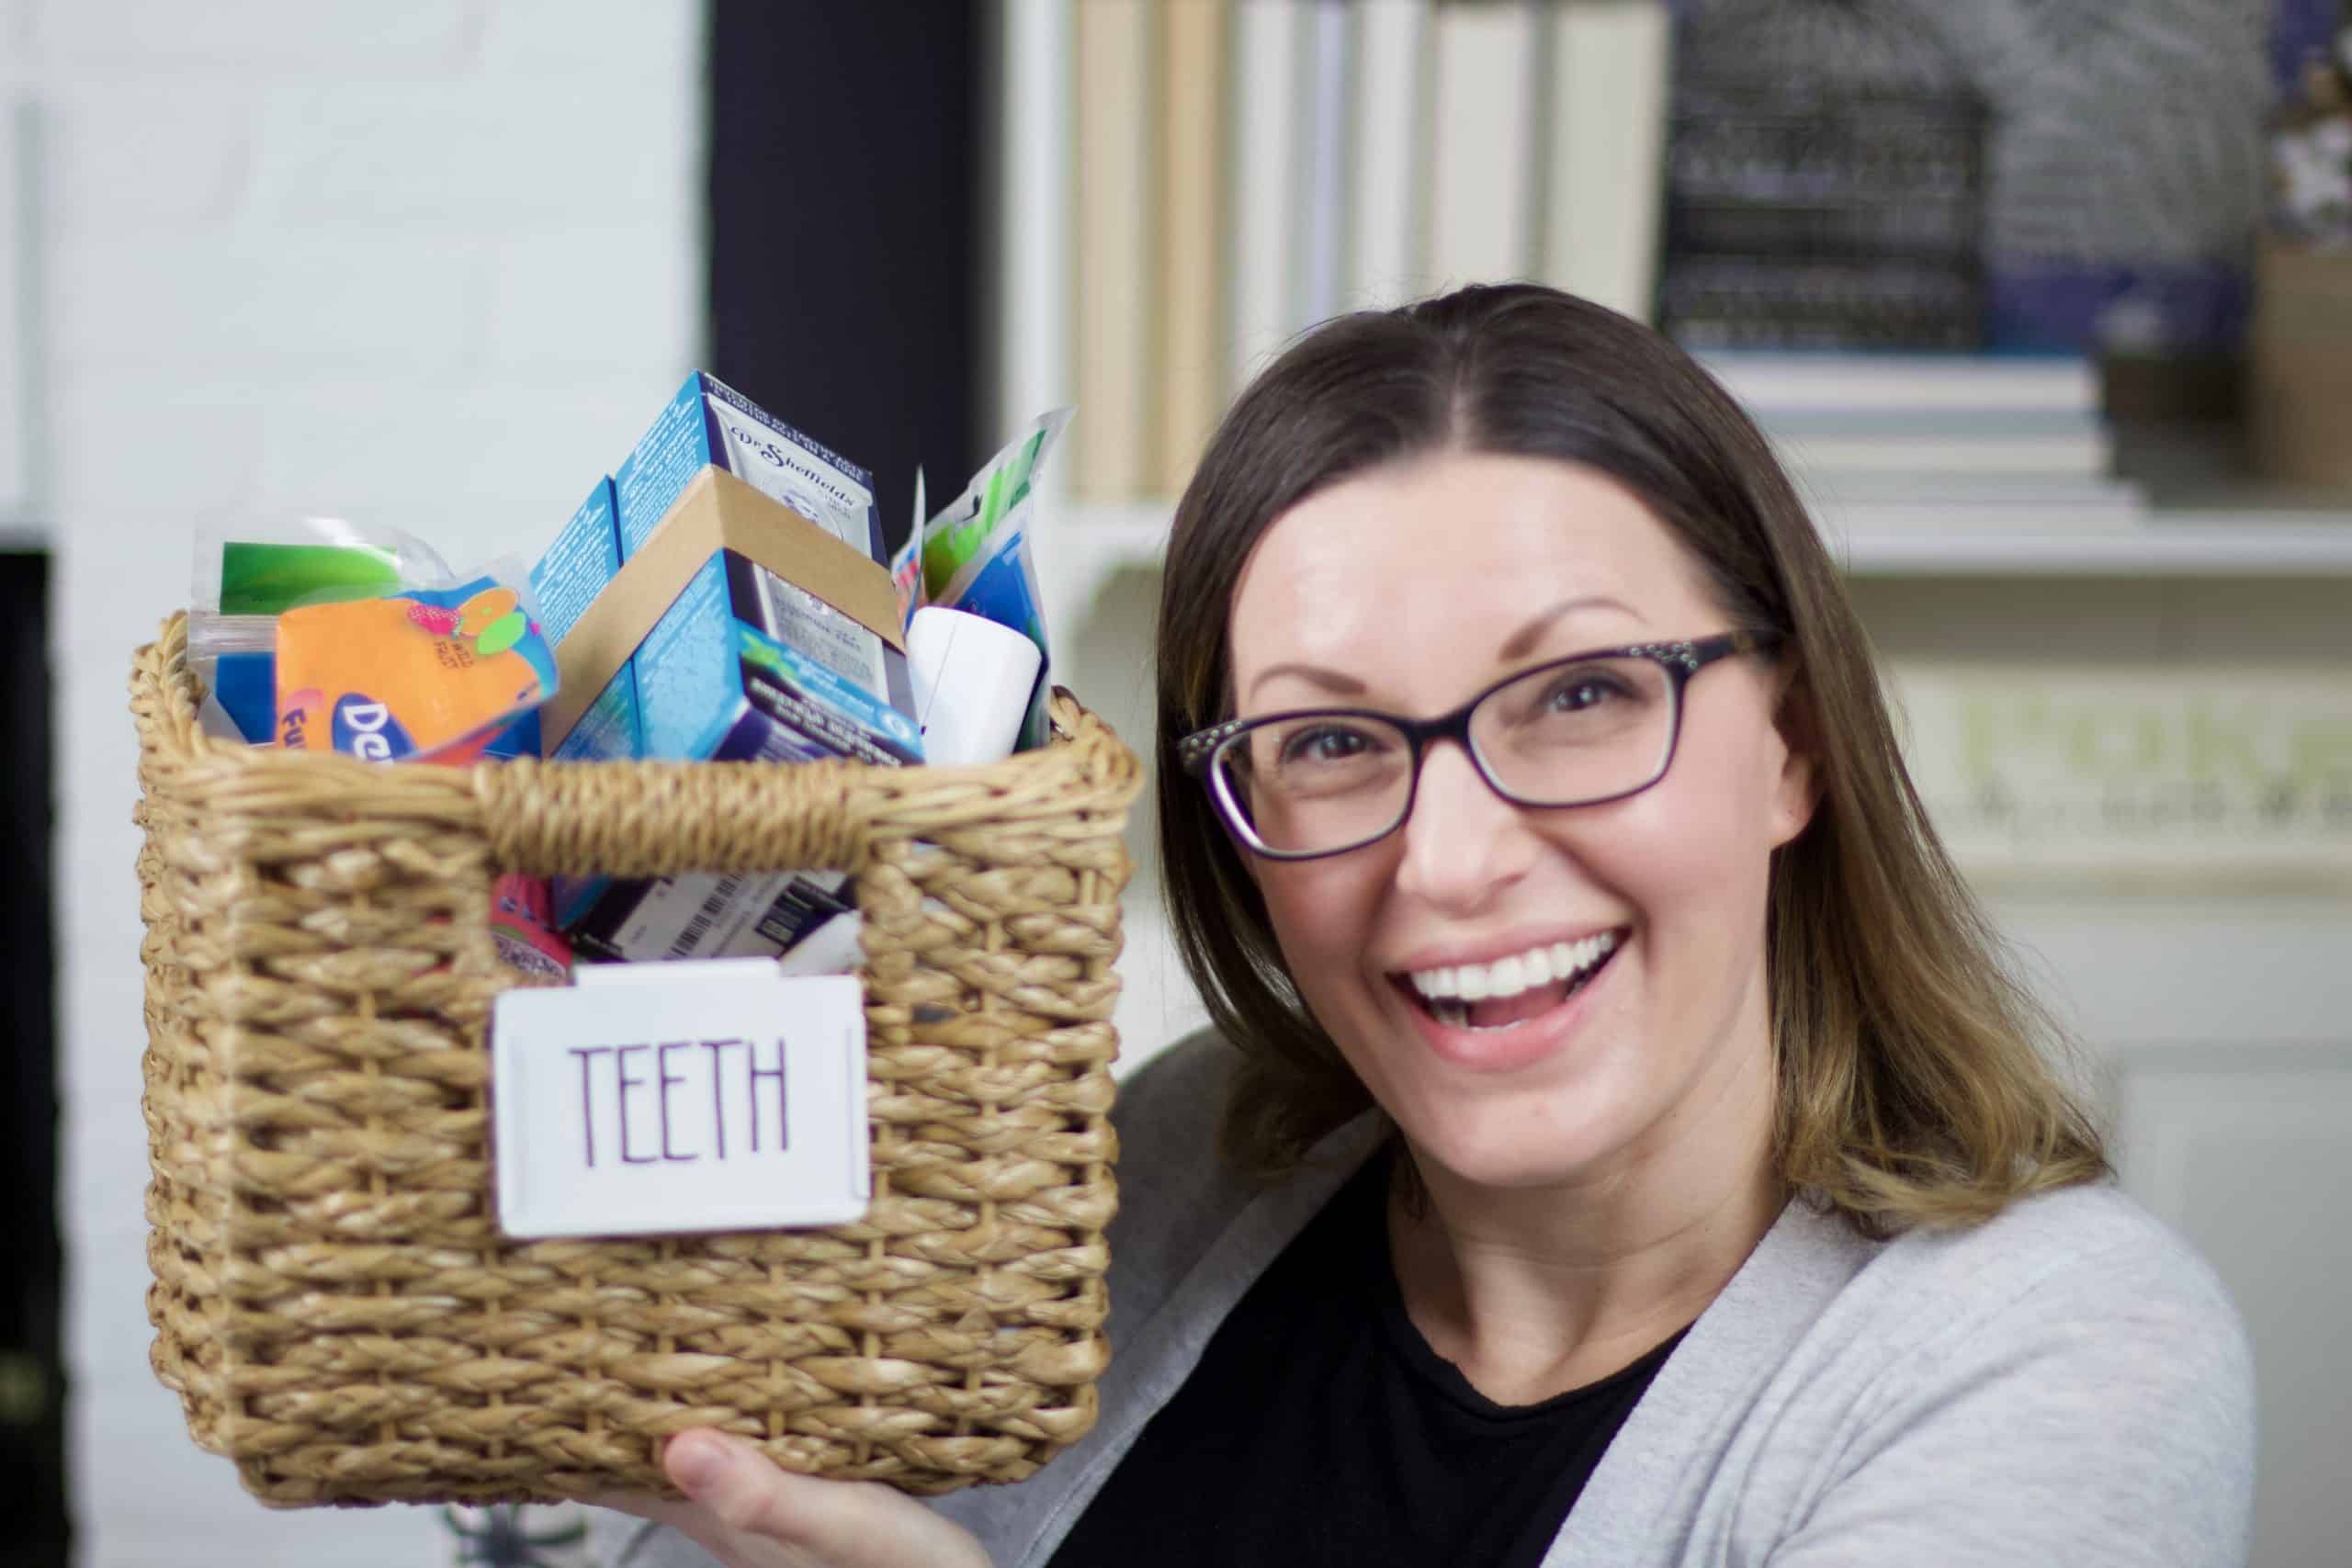 storing extra items bathroom supplies teeth in basket with teeth label